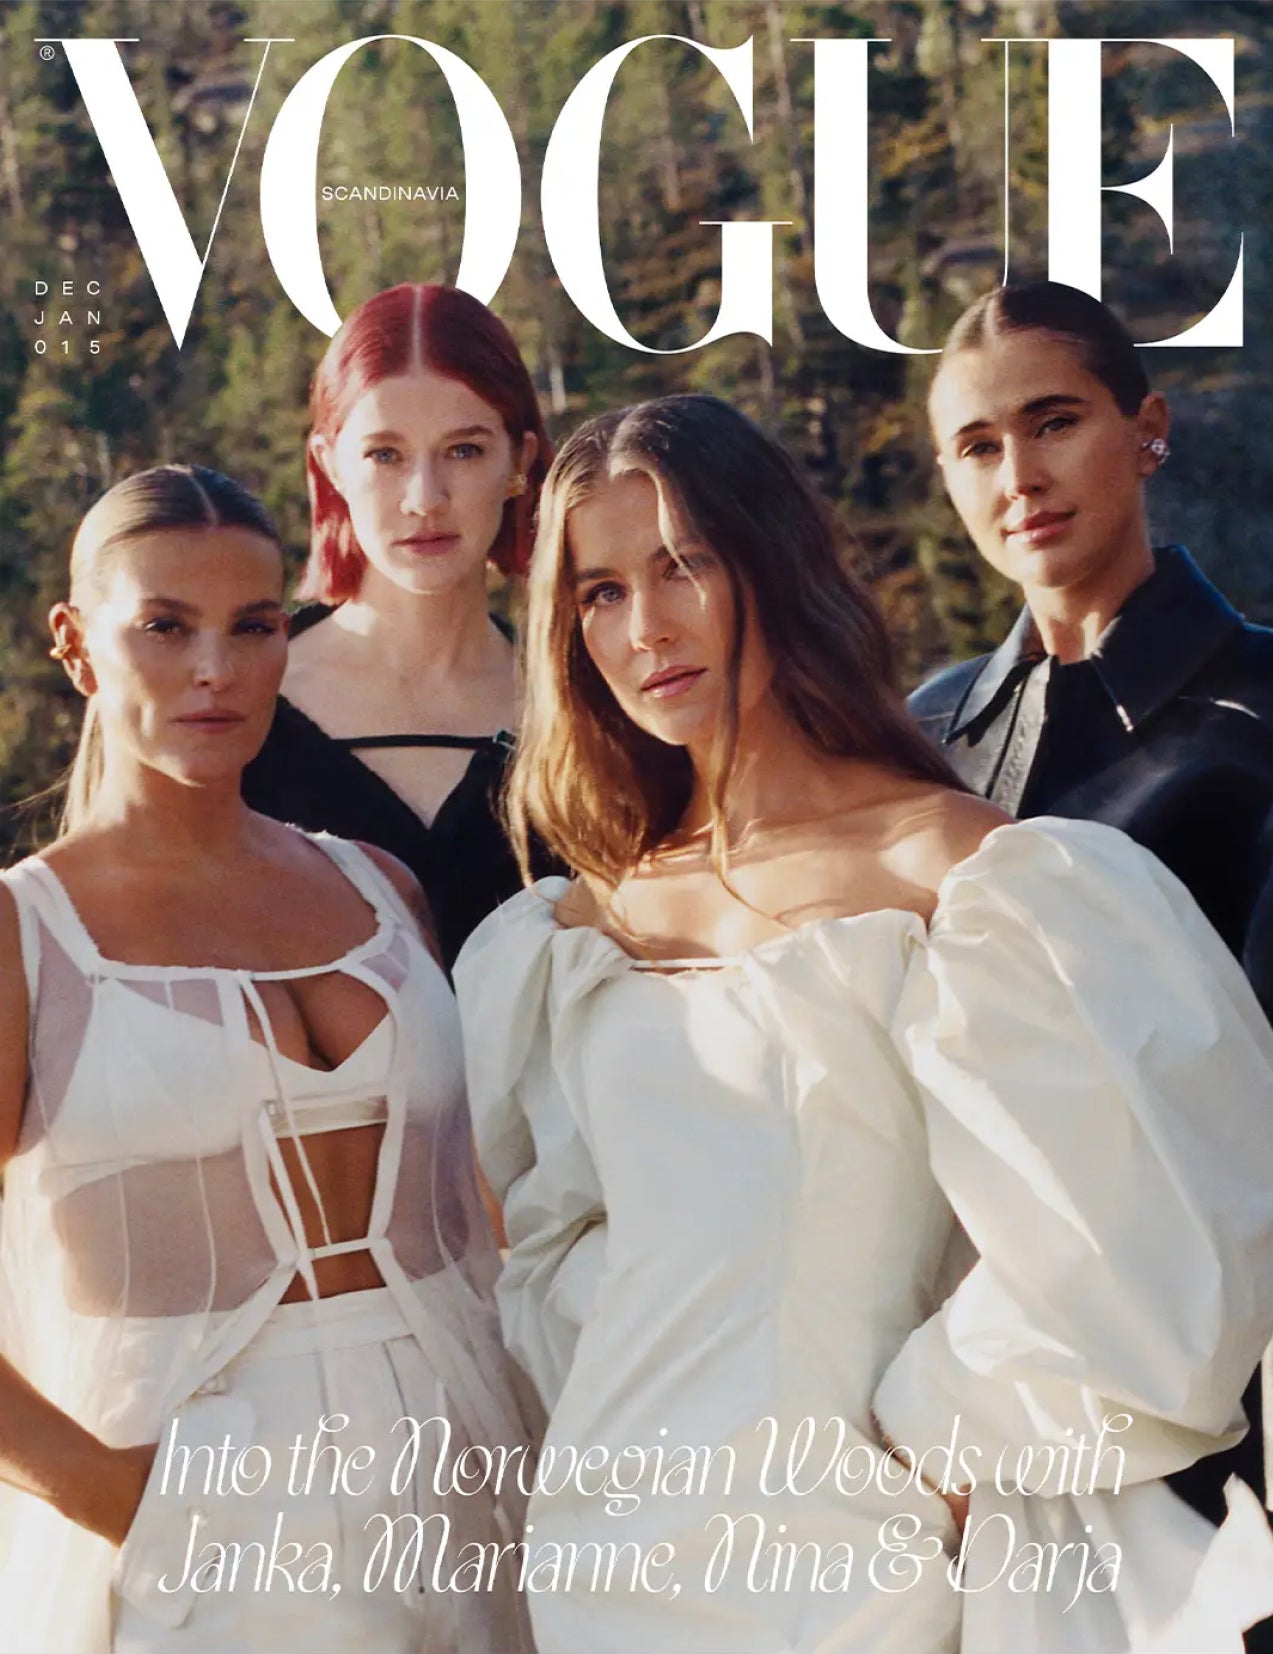 Vogue Scandinavia Issue 15